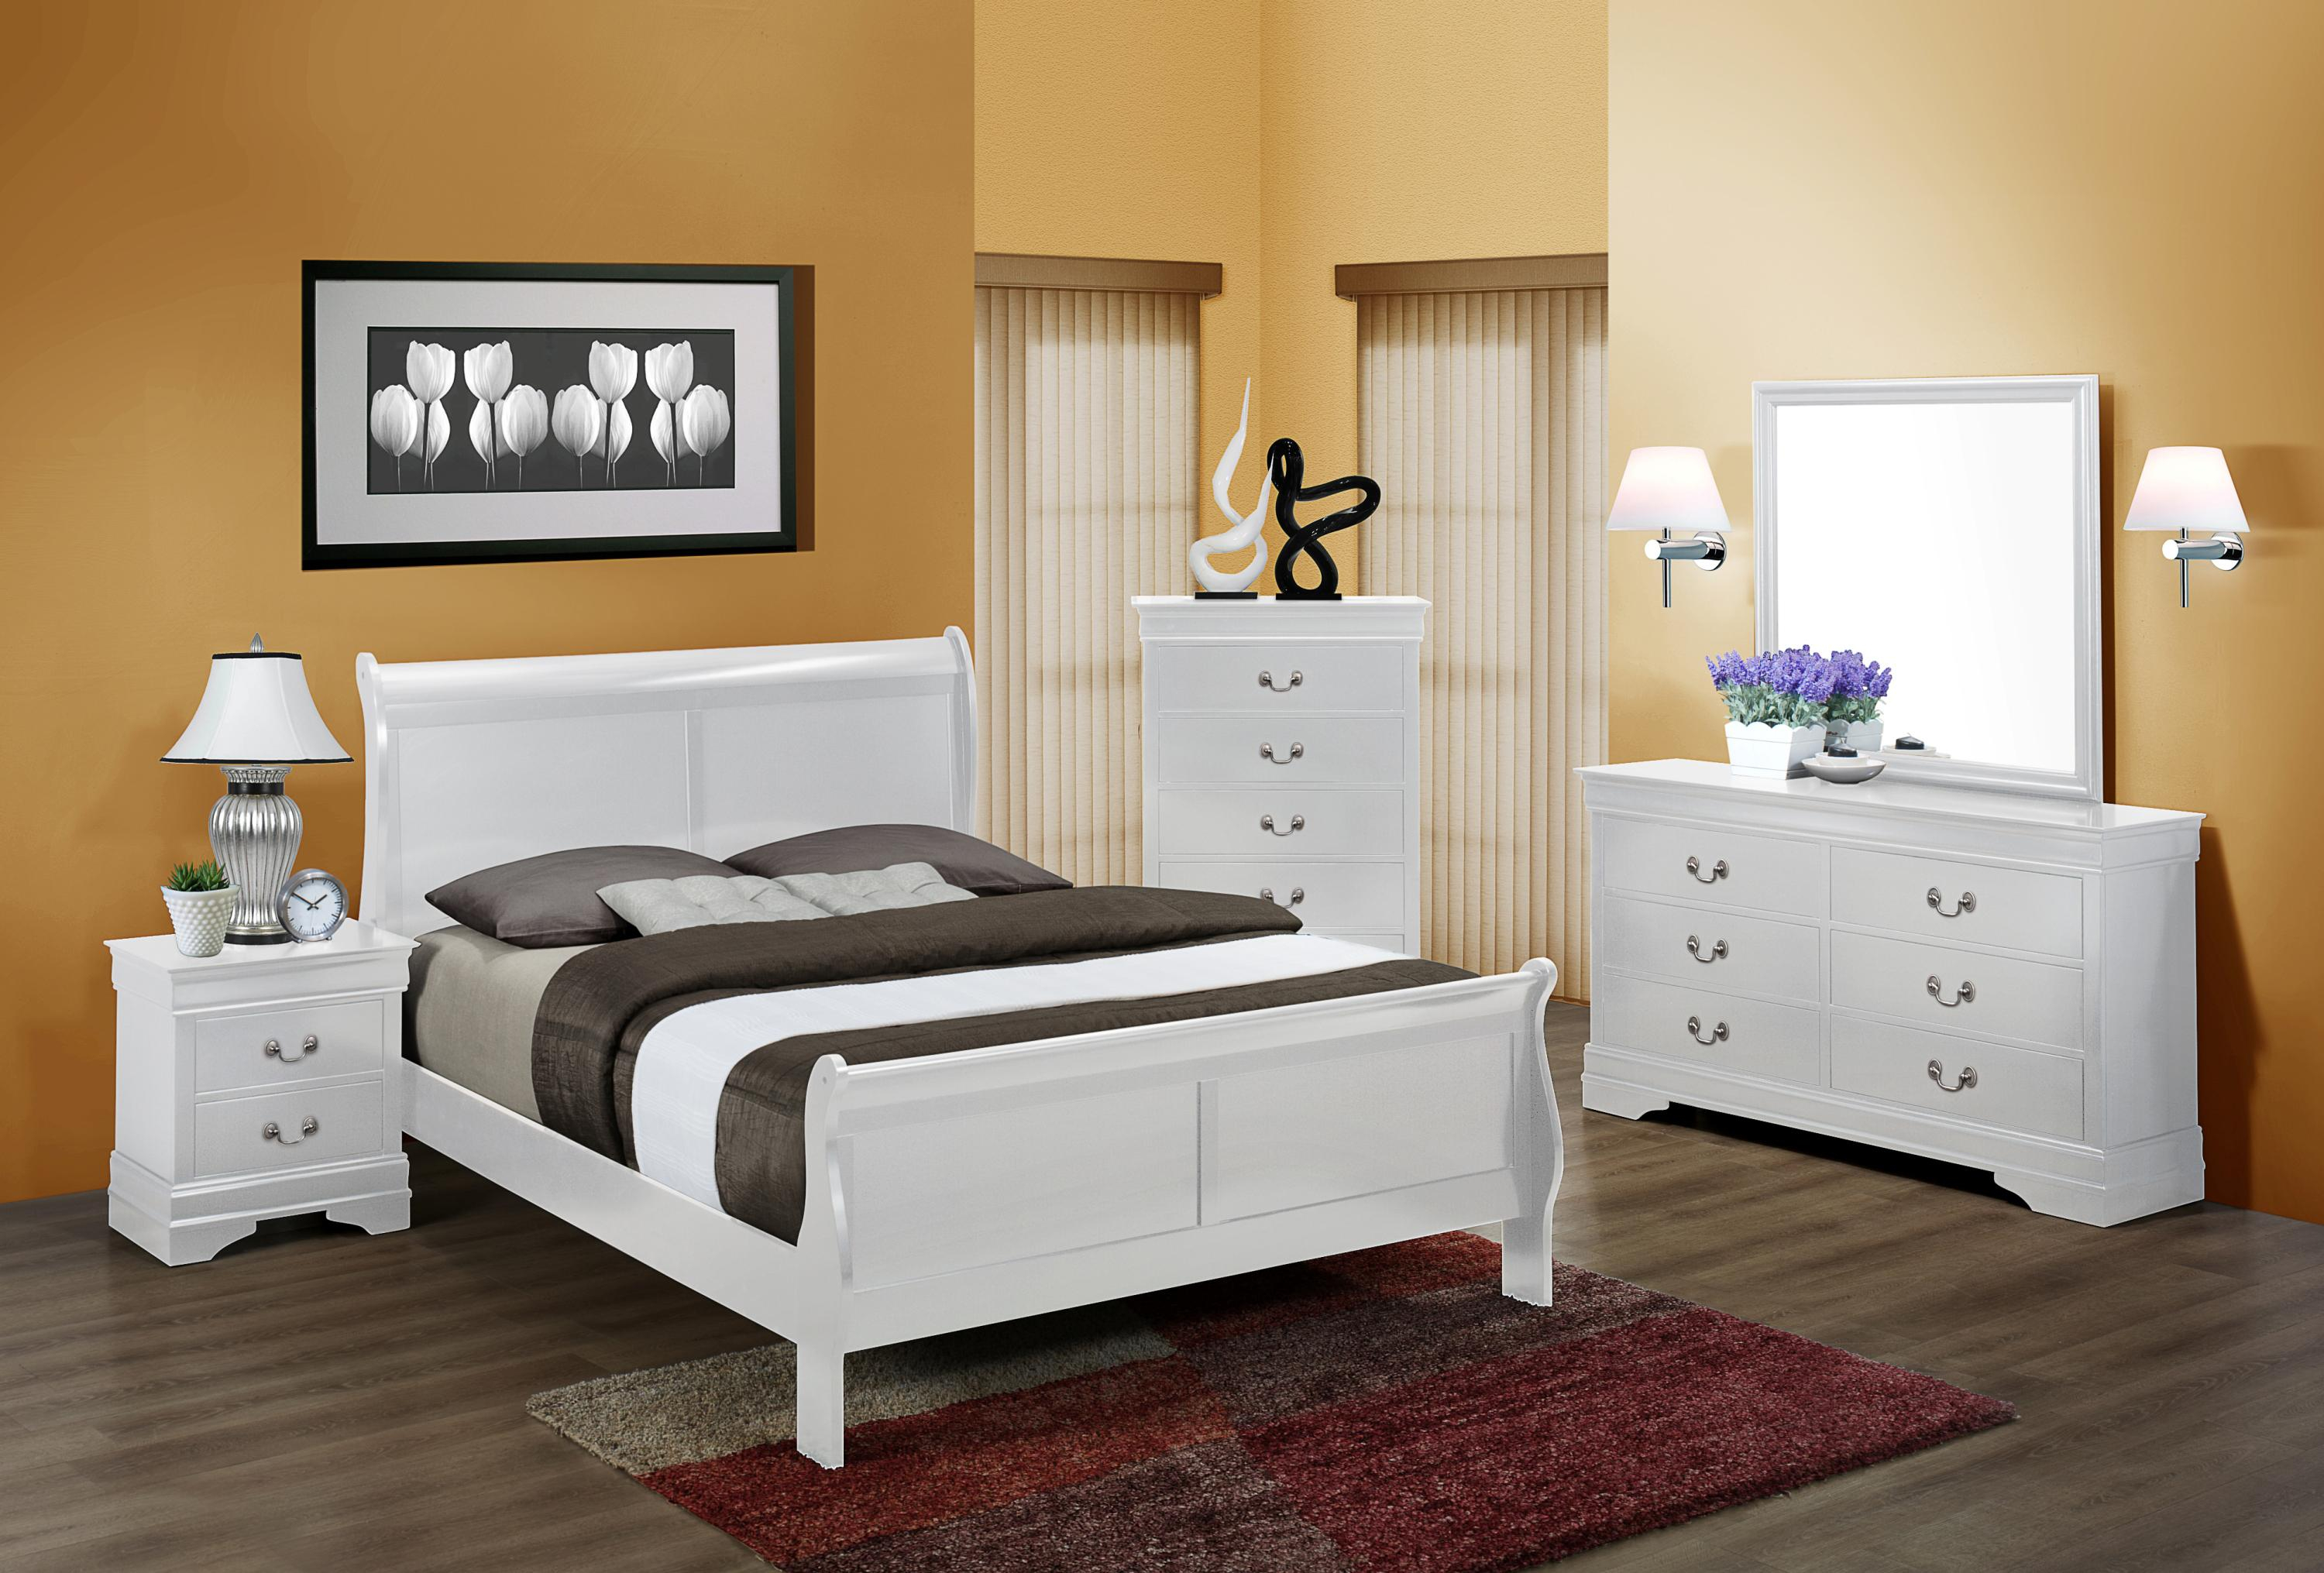 phillipe oak bedroom furniture